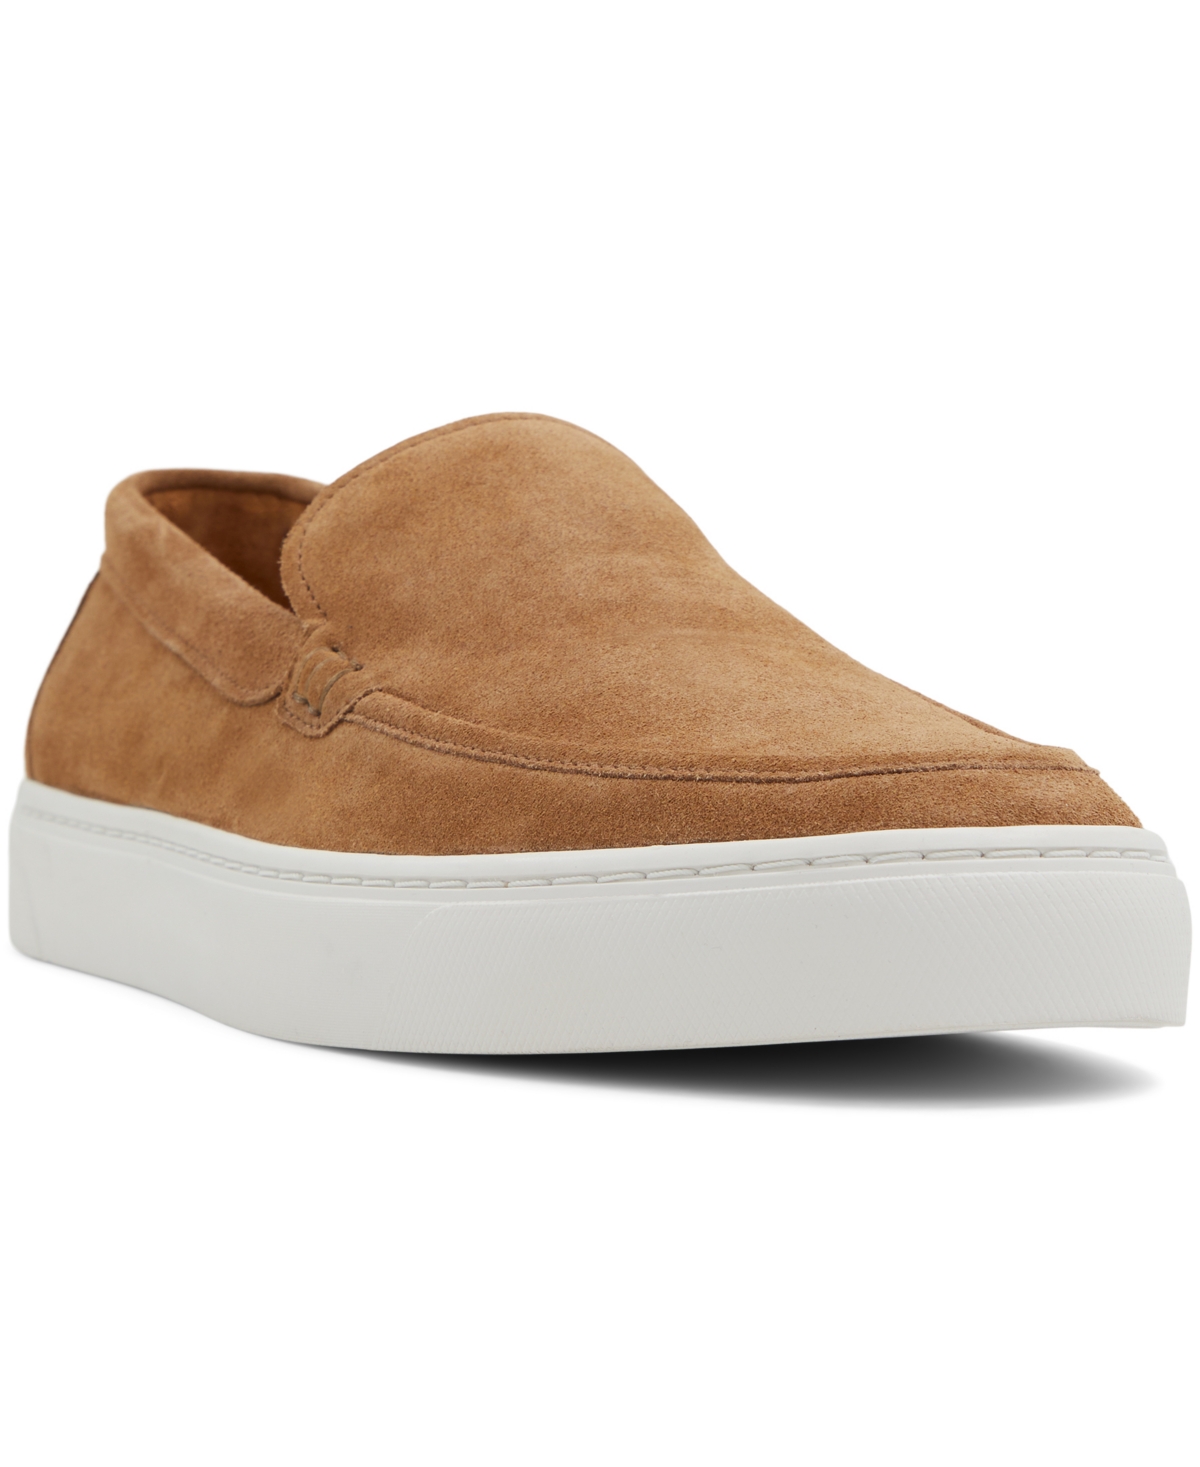 Men's Hampton Slip On Casual Loafers - Medium brown